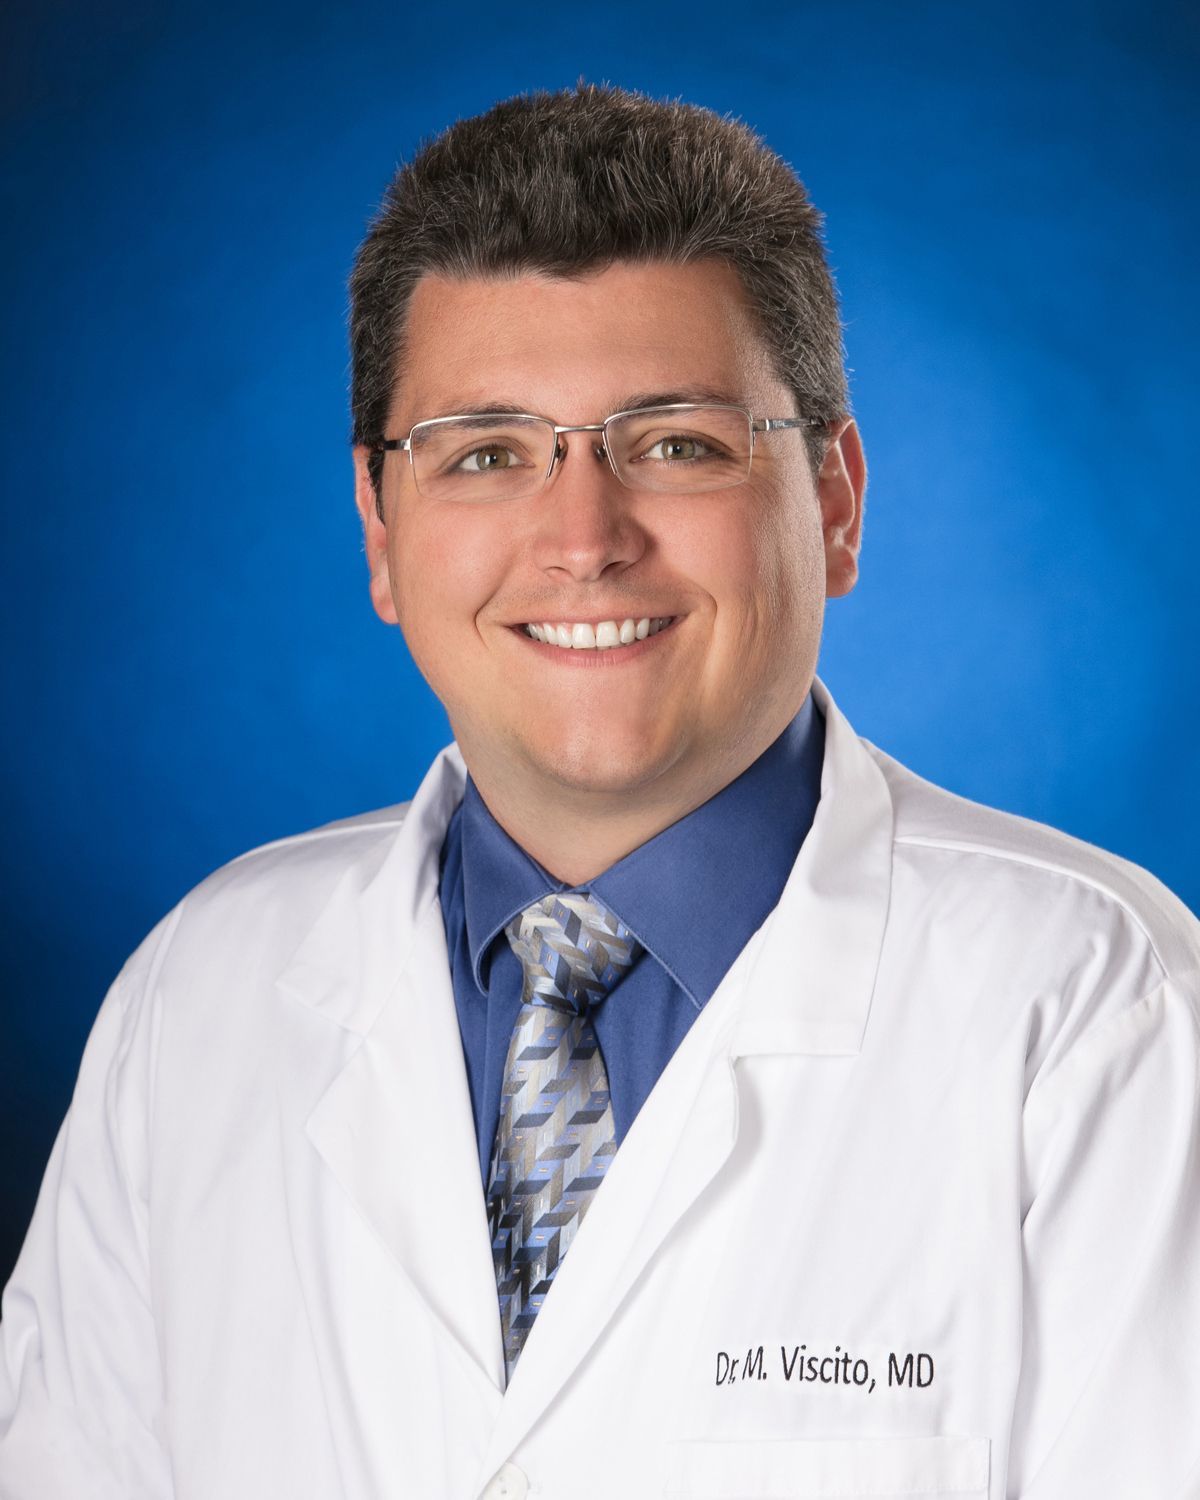 Dr. Matthew Viscito, CMO